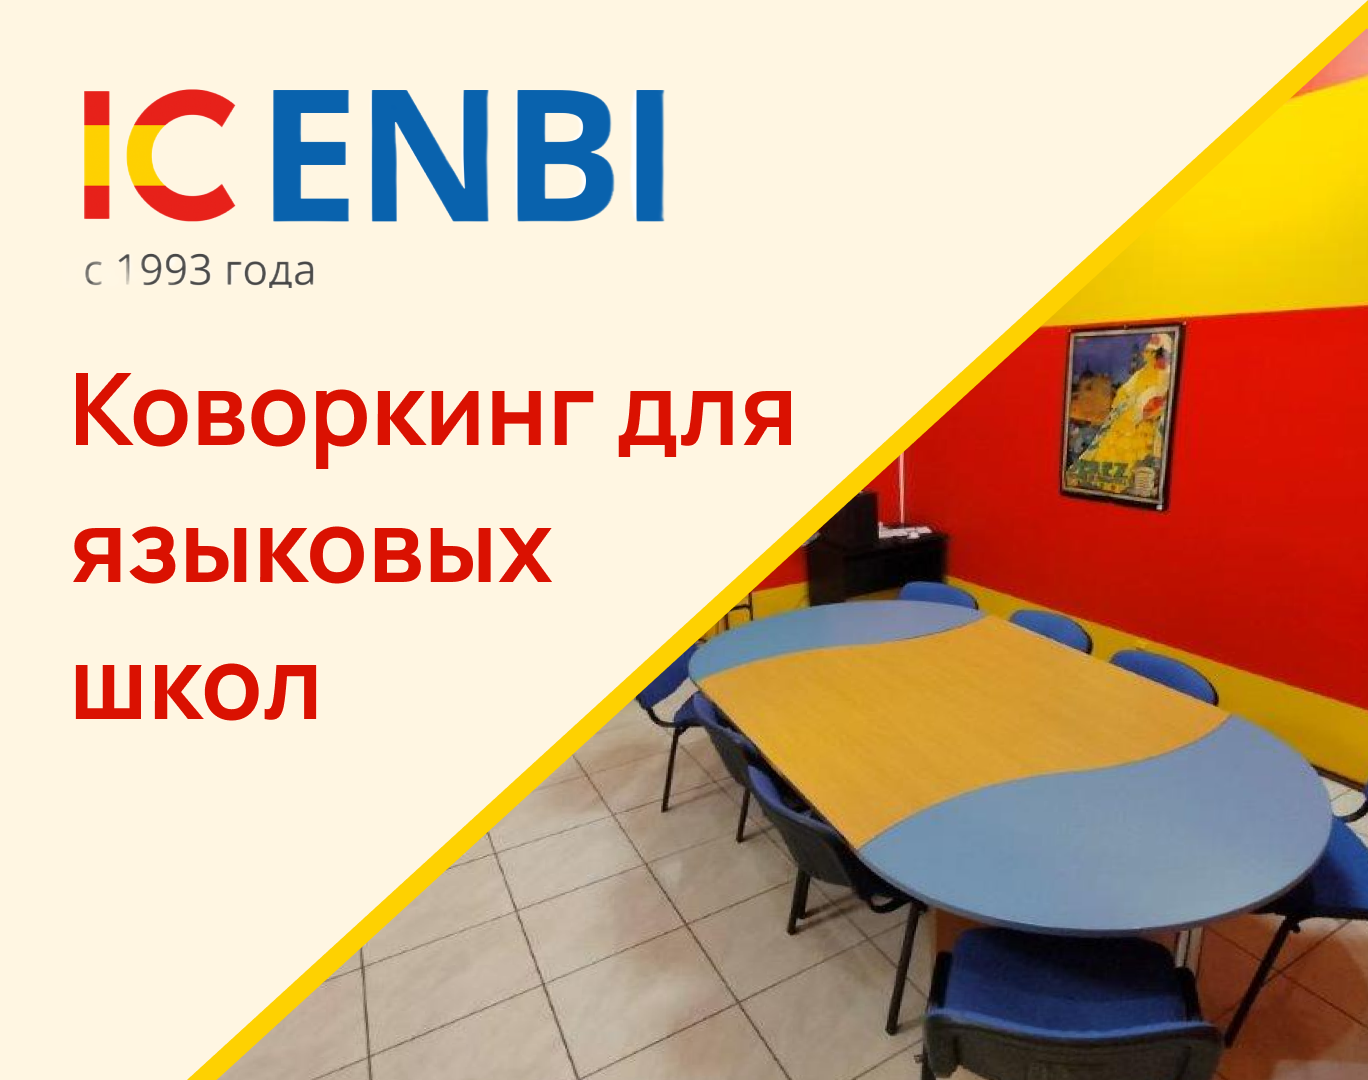 (c) Enbi.ru